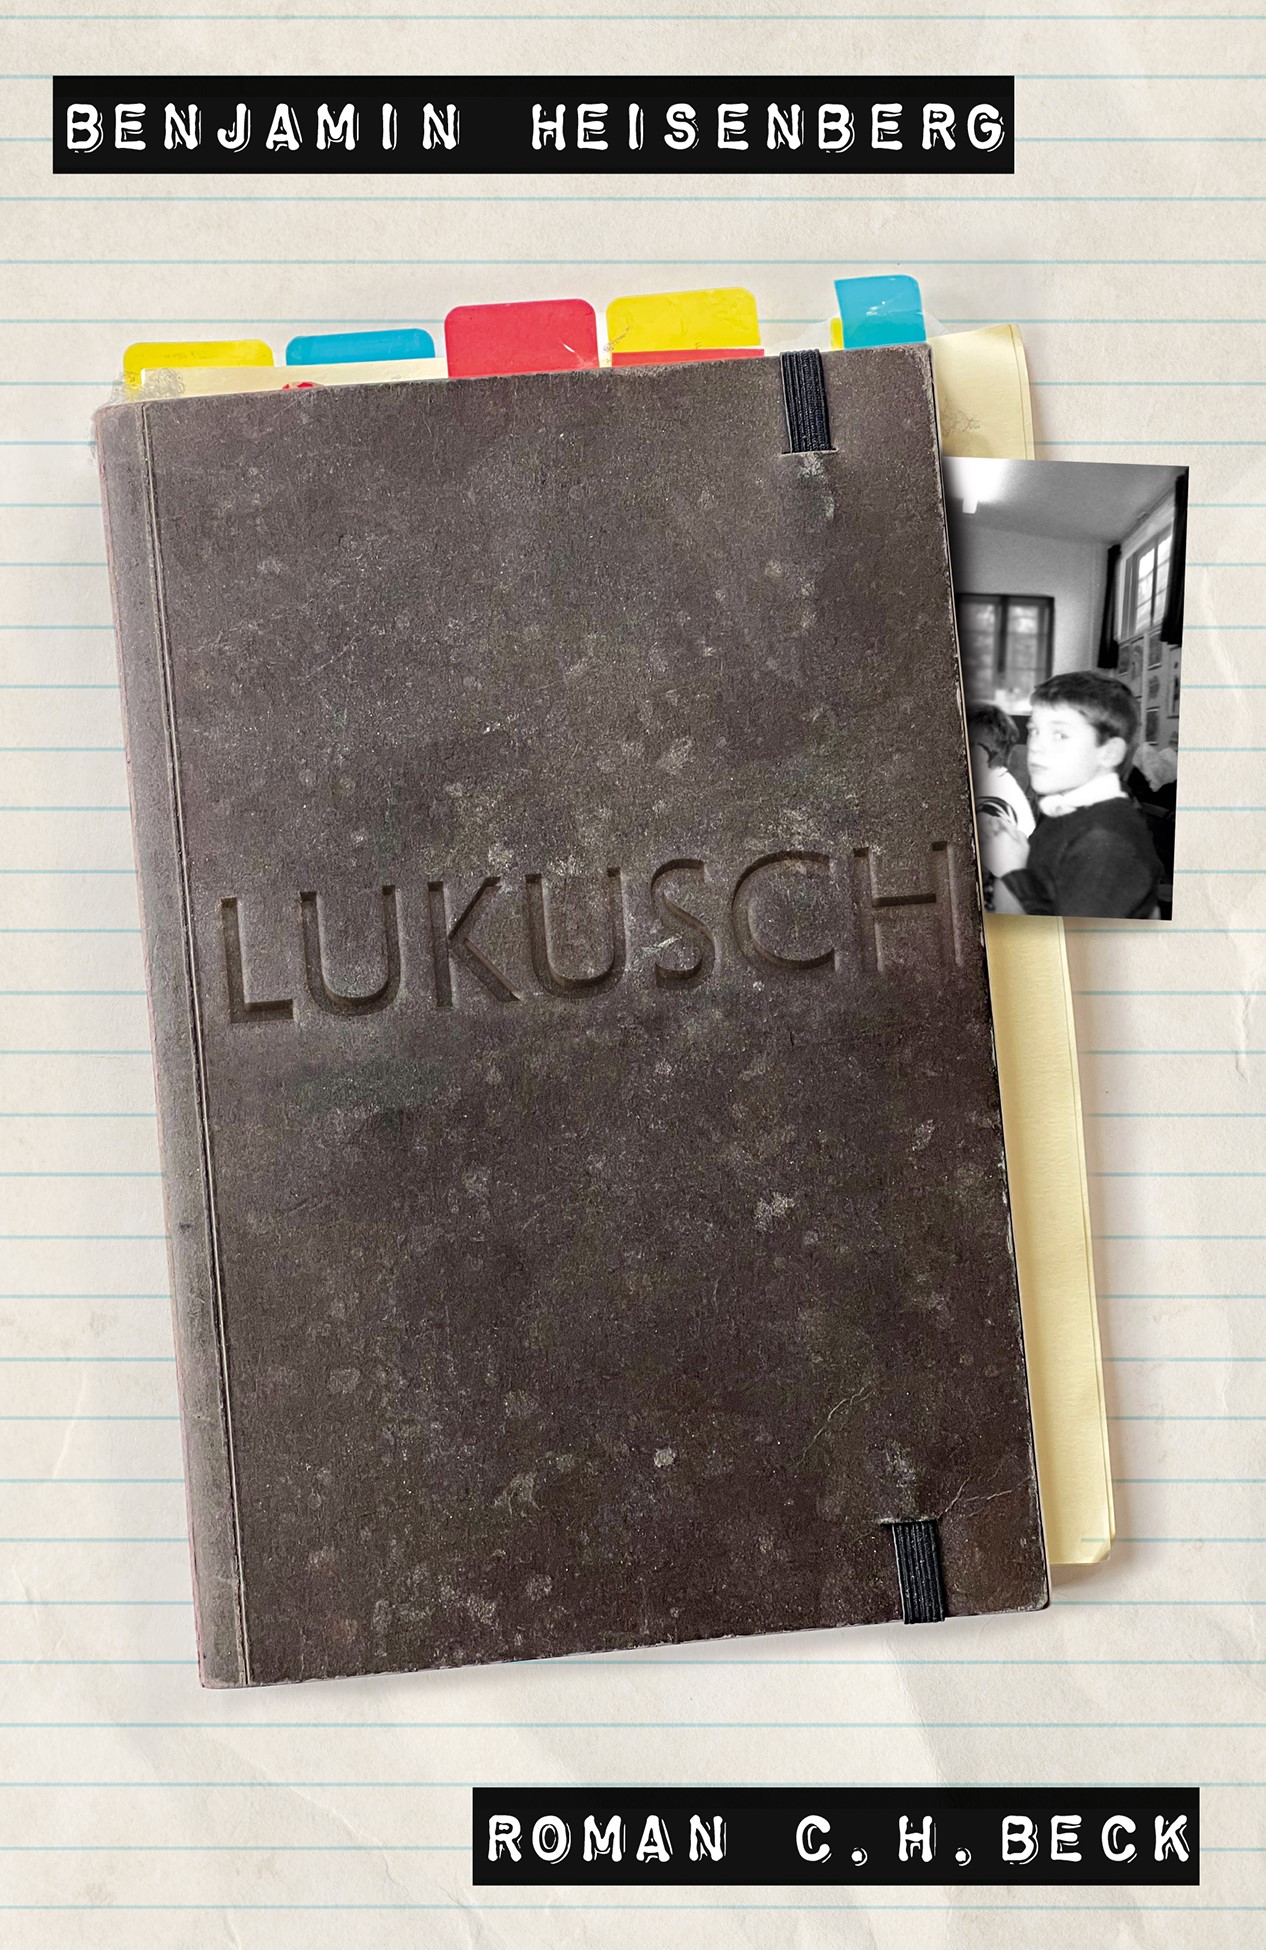 Cover: Heisenberg, Benjamin, Lukusch